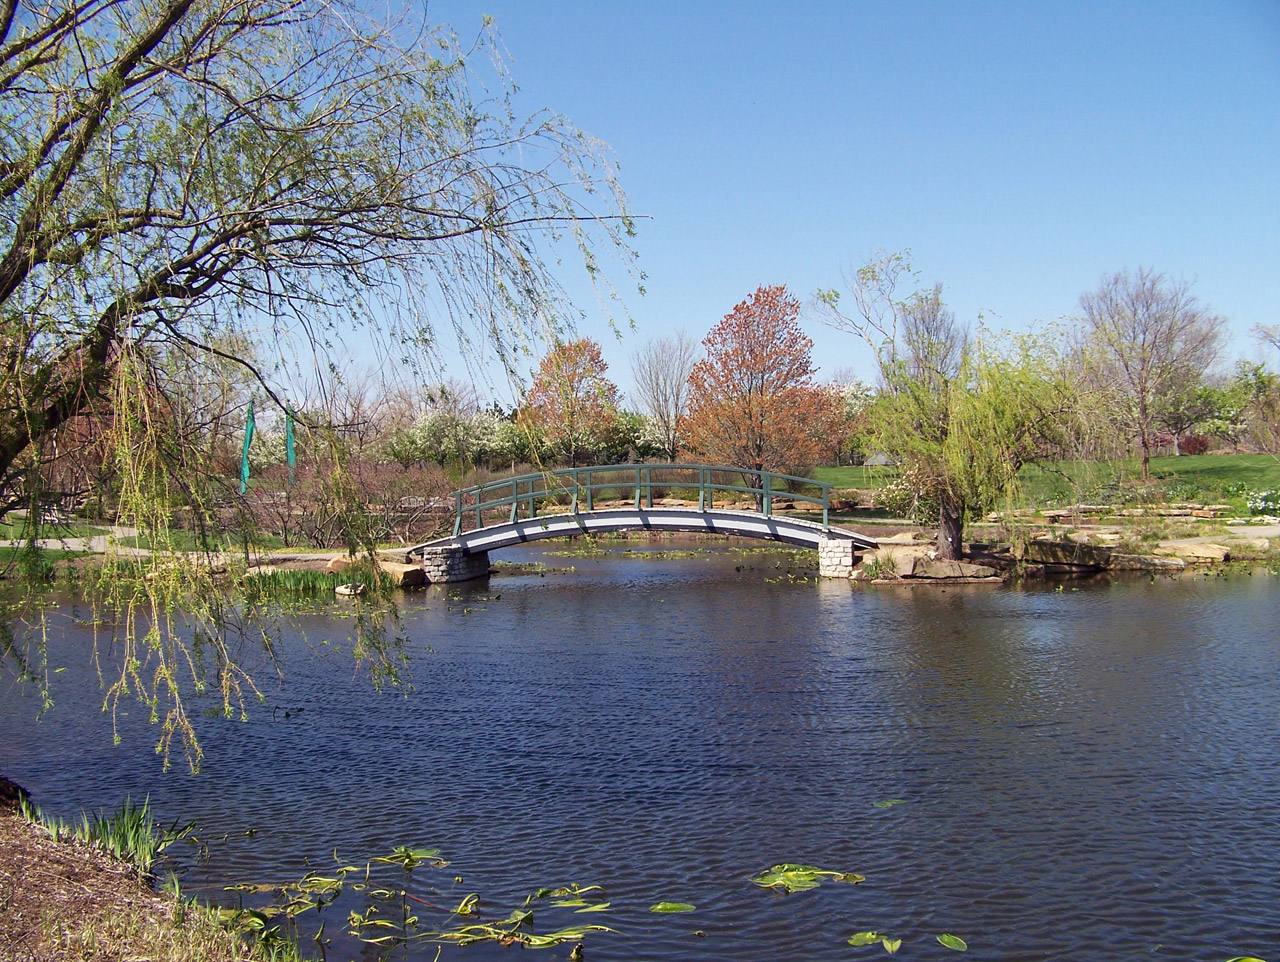 Monet Bridge, late autumn in a park